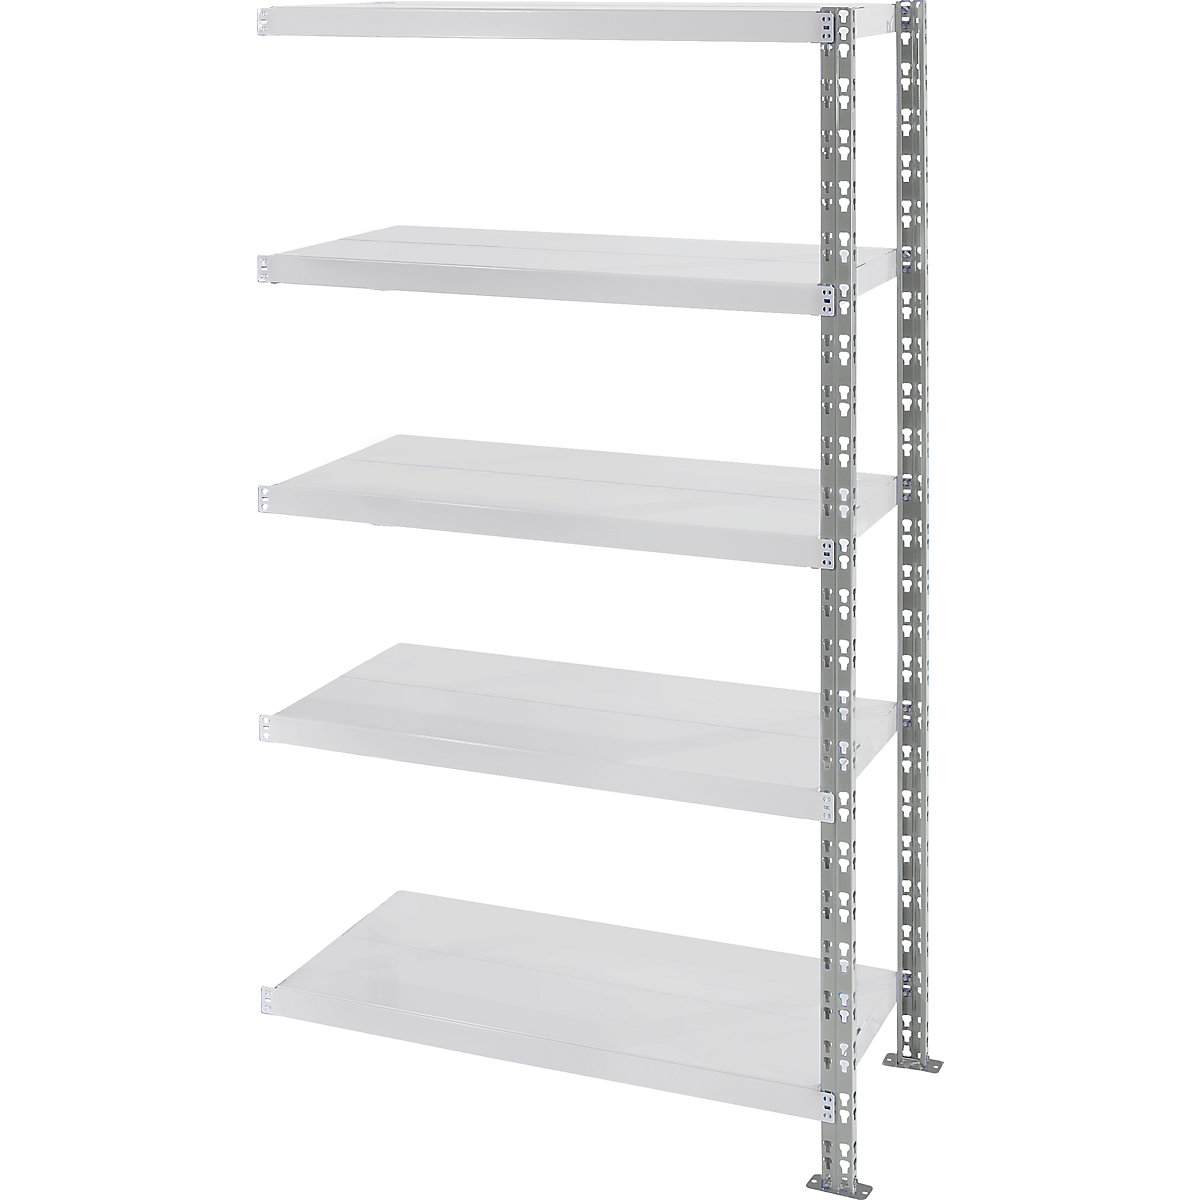 Universal boltless shelving unit, sheet steel shelves, HxWxD 1820 x 1025 x 400 mm, extension shelf unit